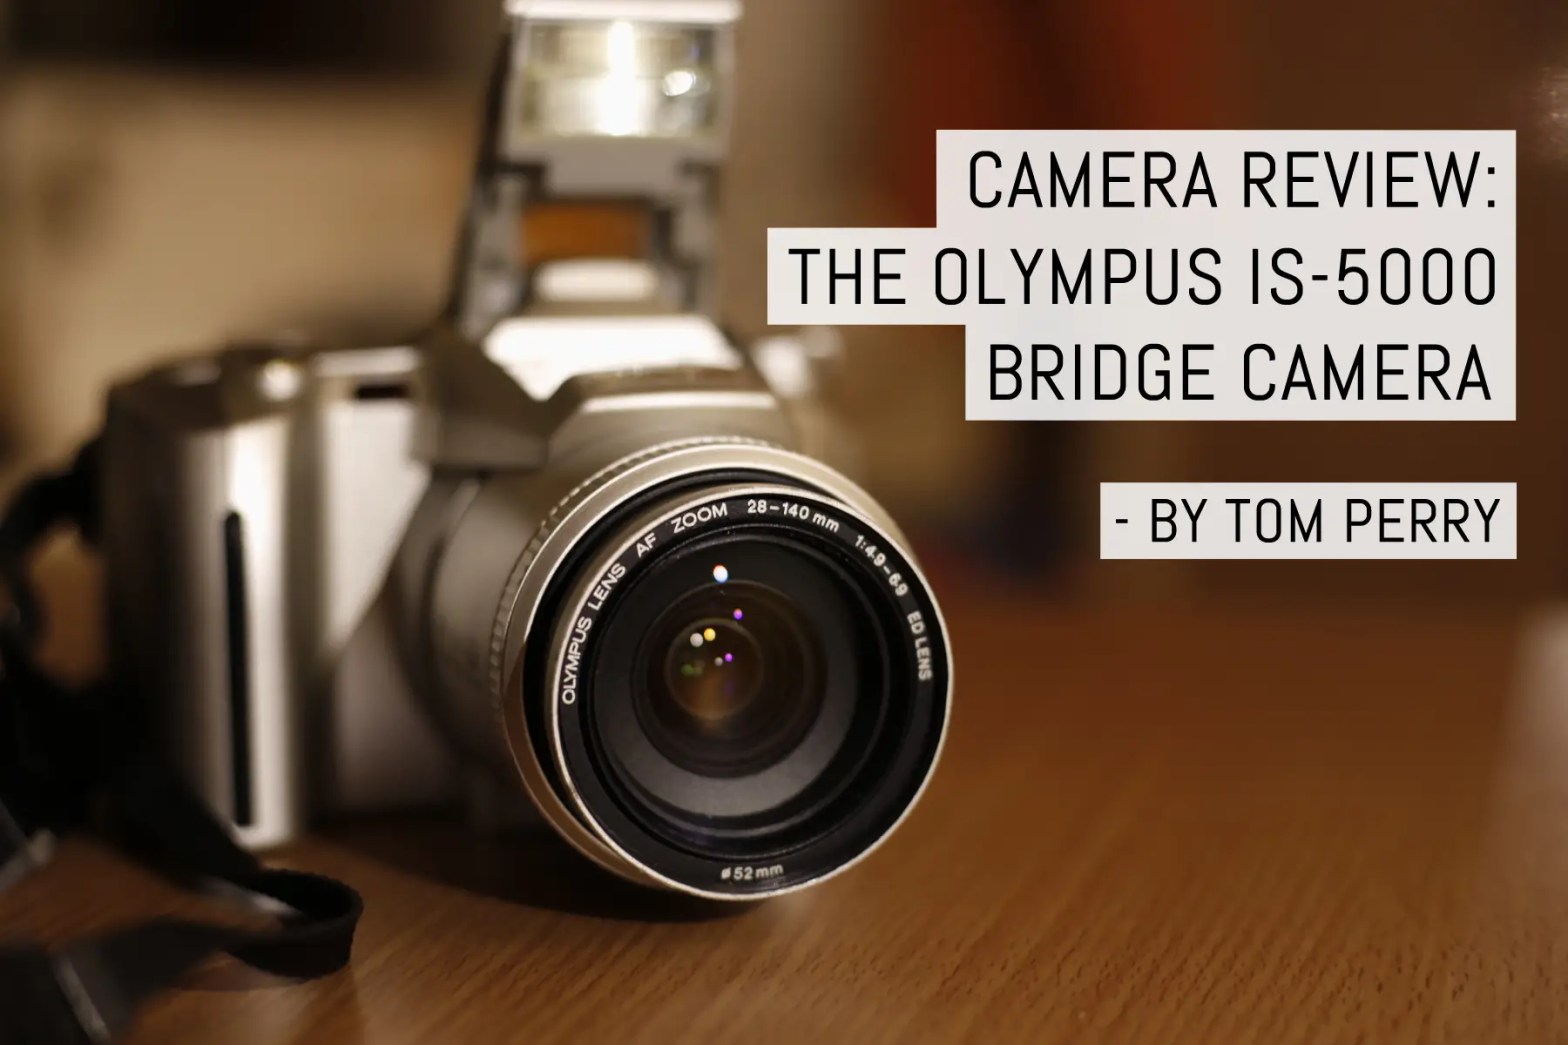 Camera review: the Olympus IS-5000 bridge camera